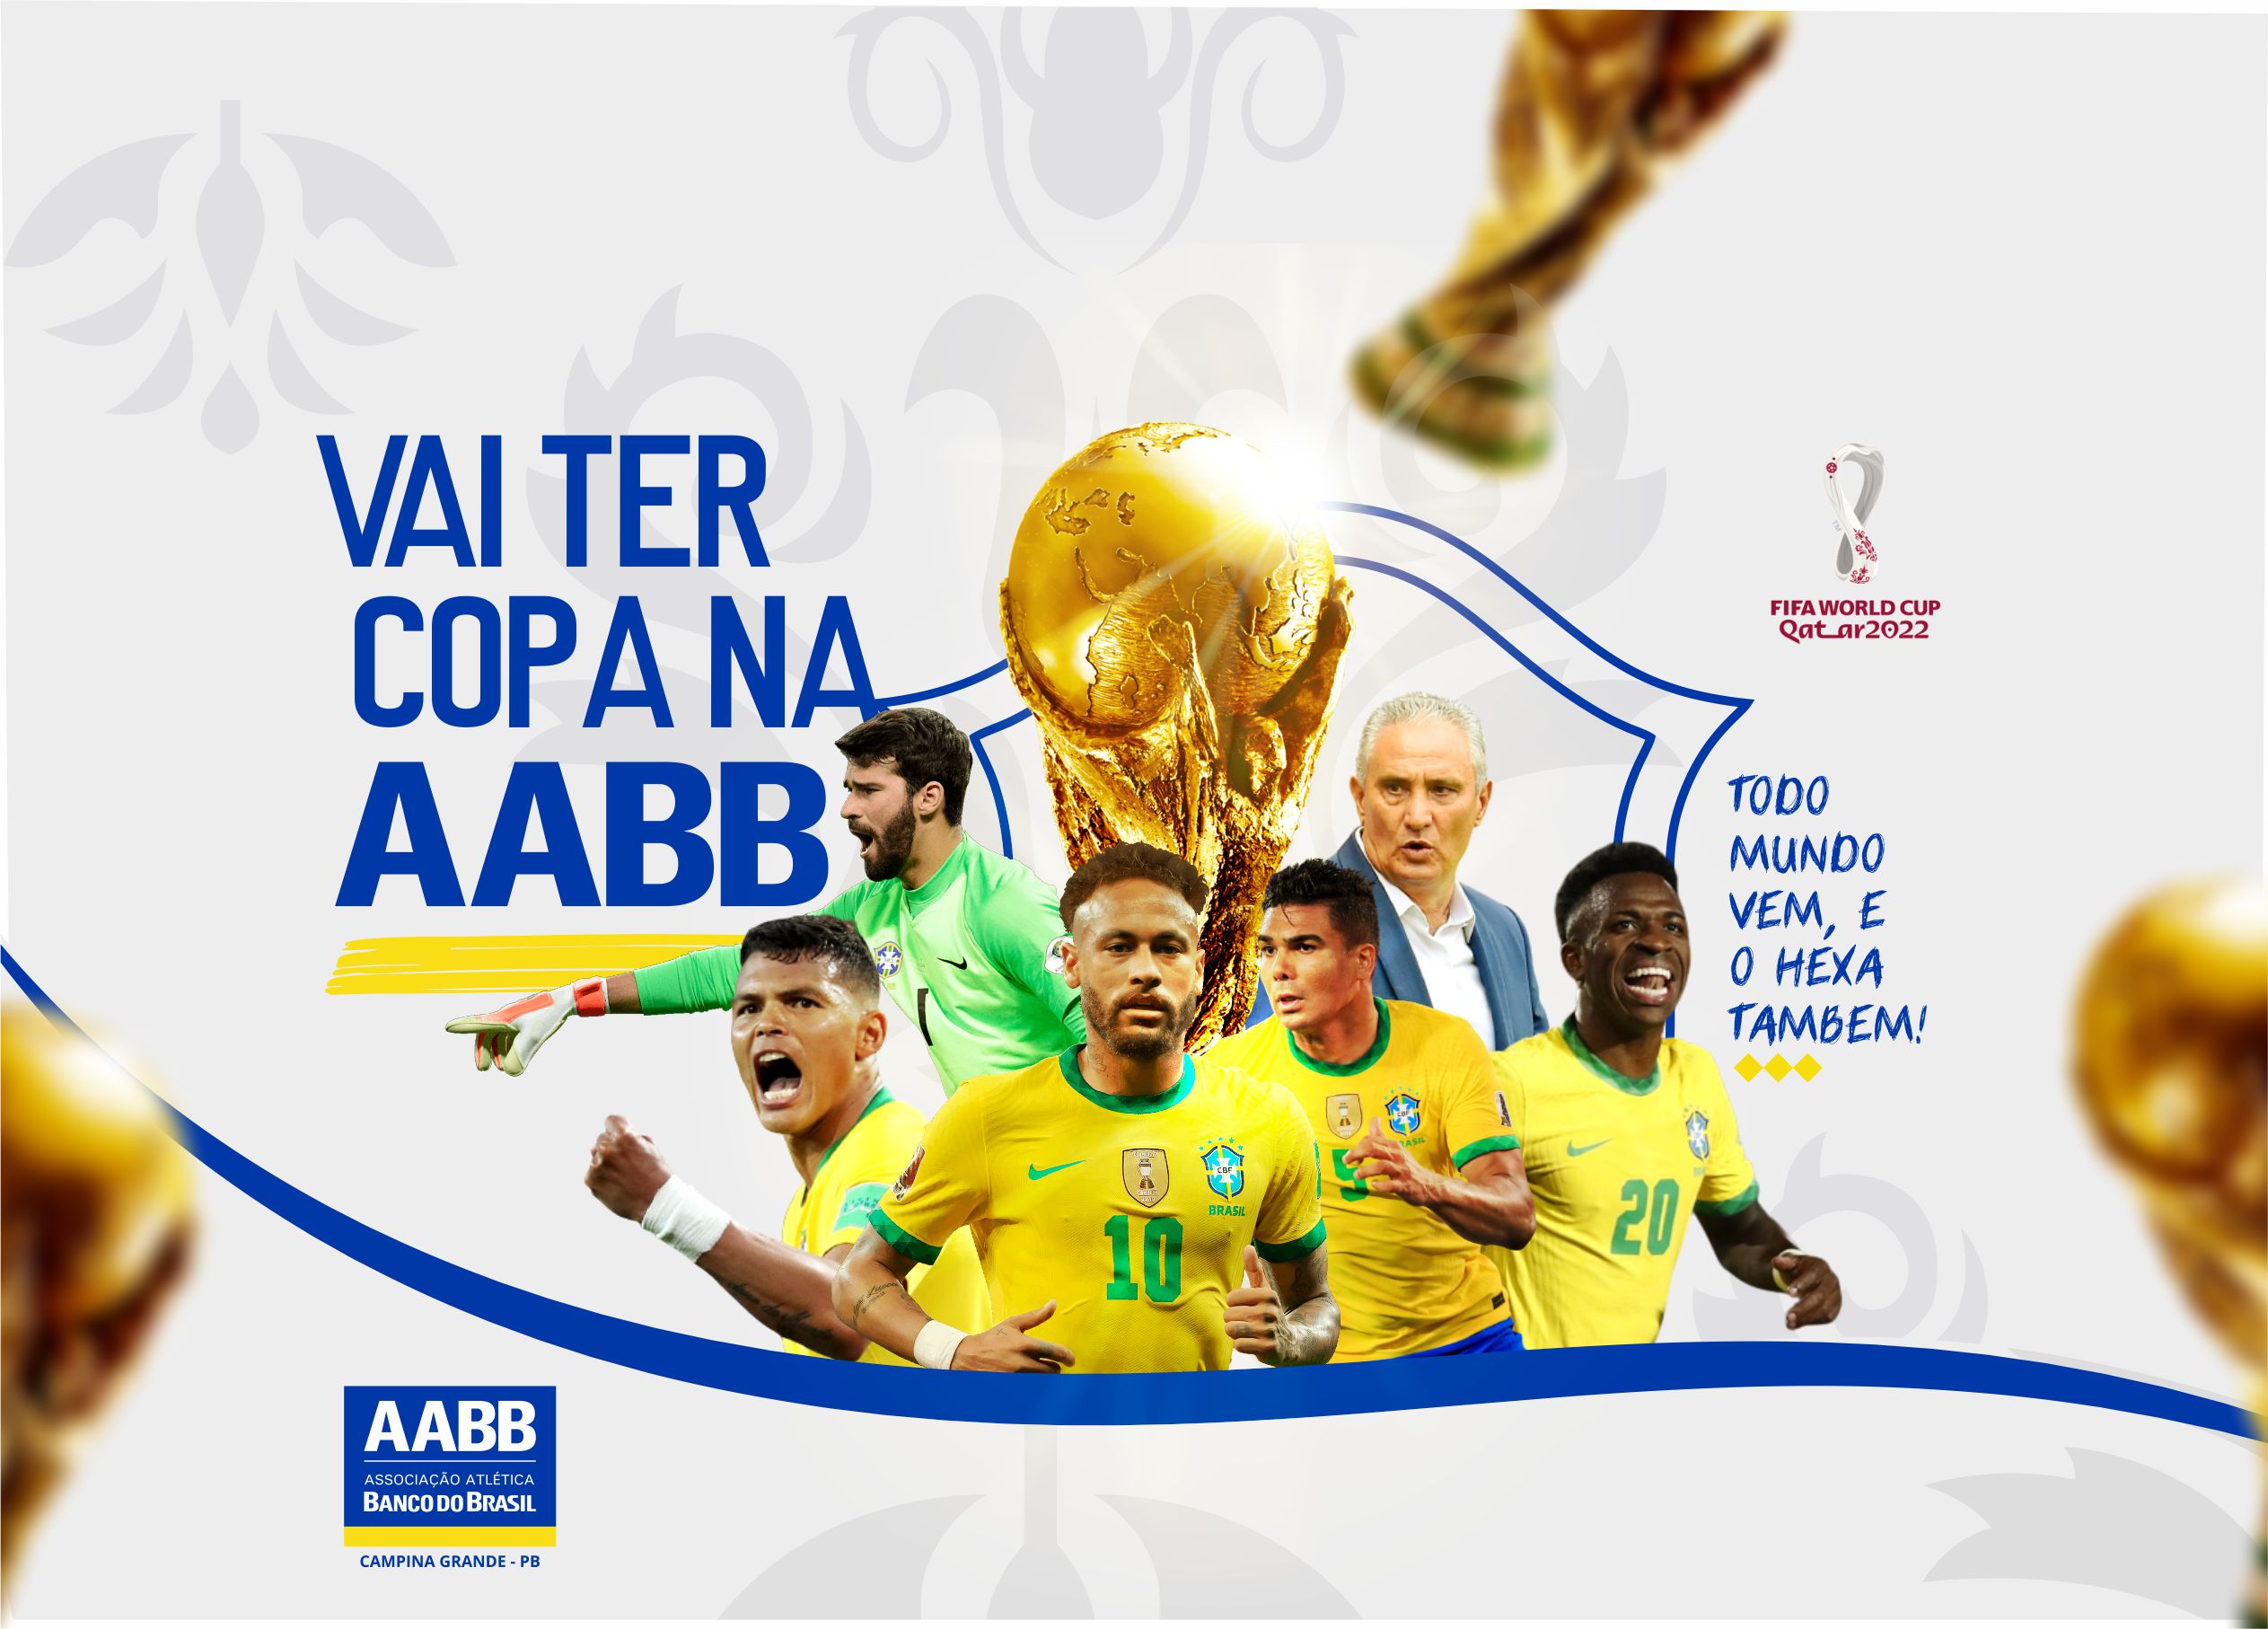 AABB AABB transmitirá os jogos do Brasil na Copa do Mundo 2022